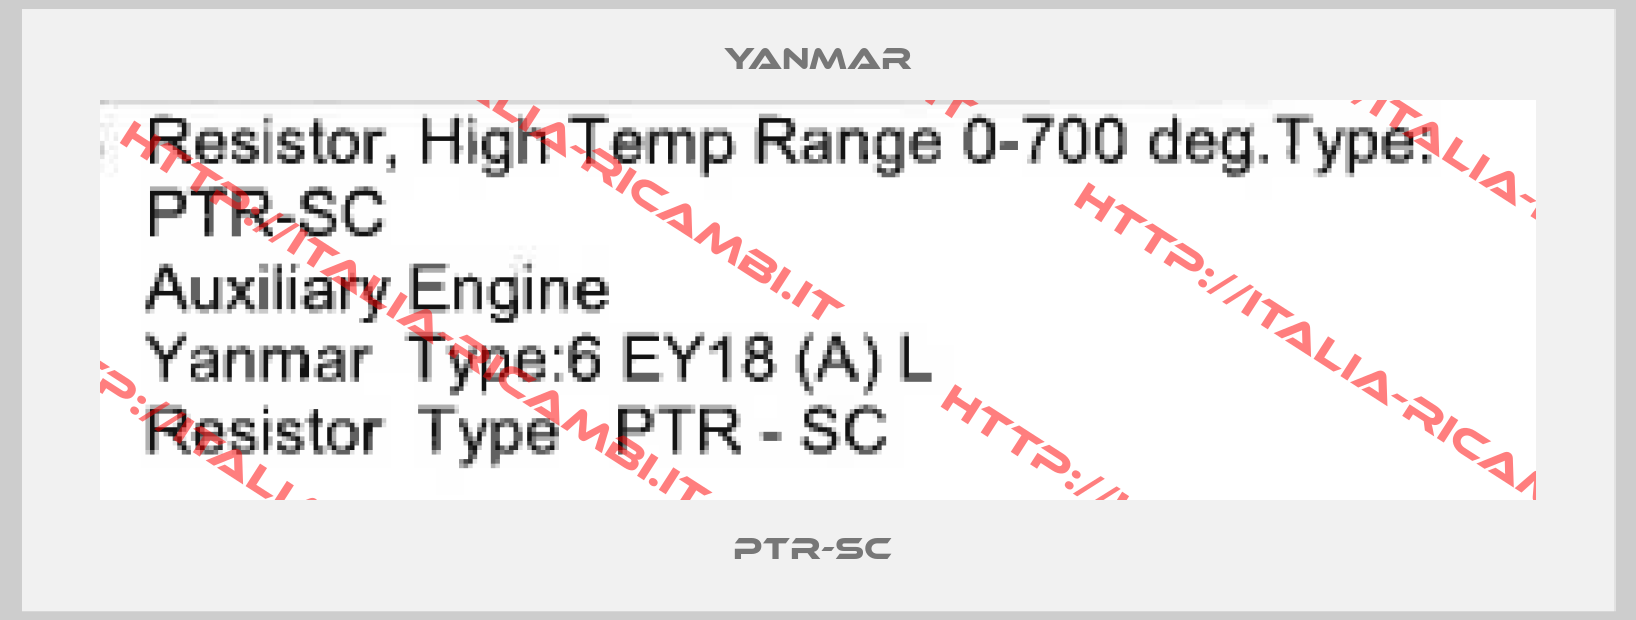 Yanmar-PTR-SC 